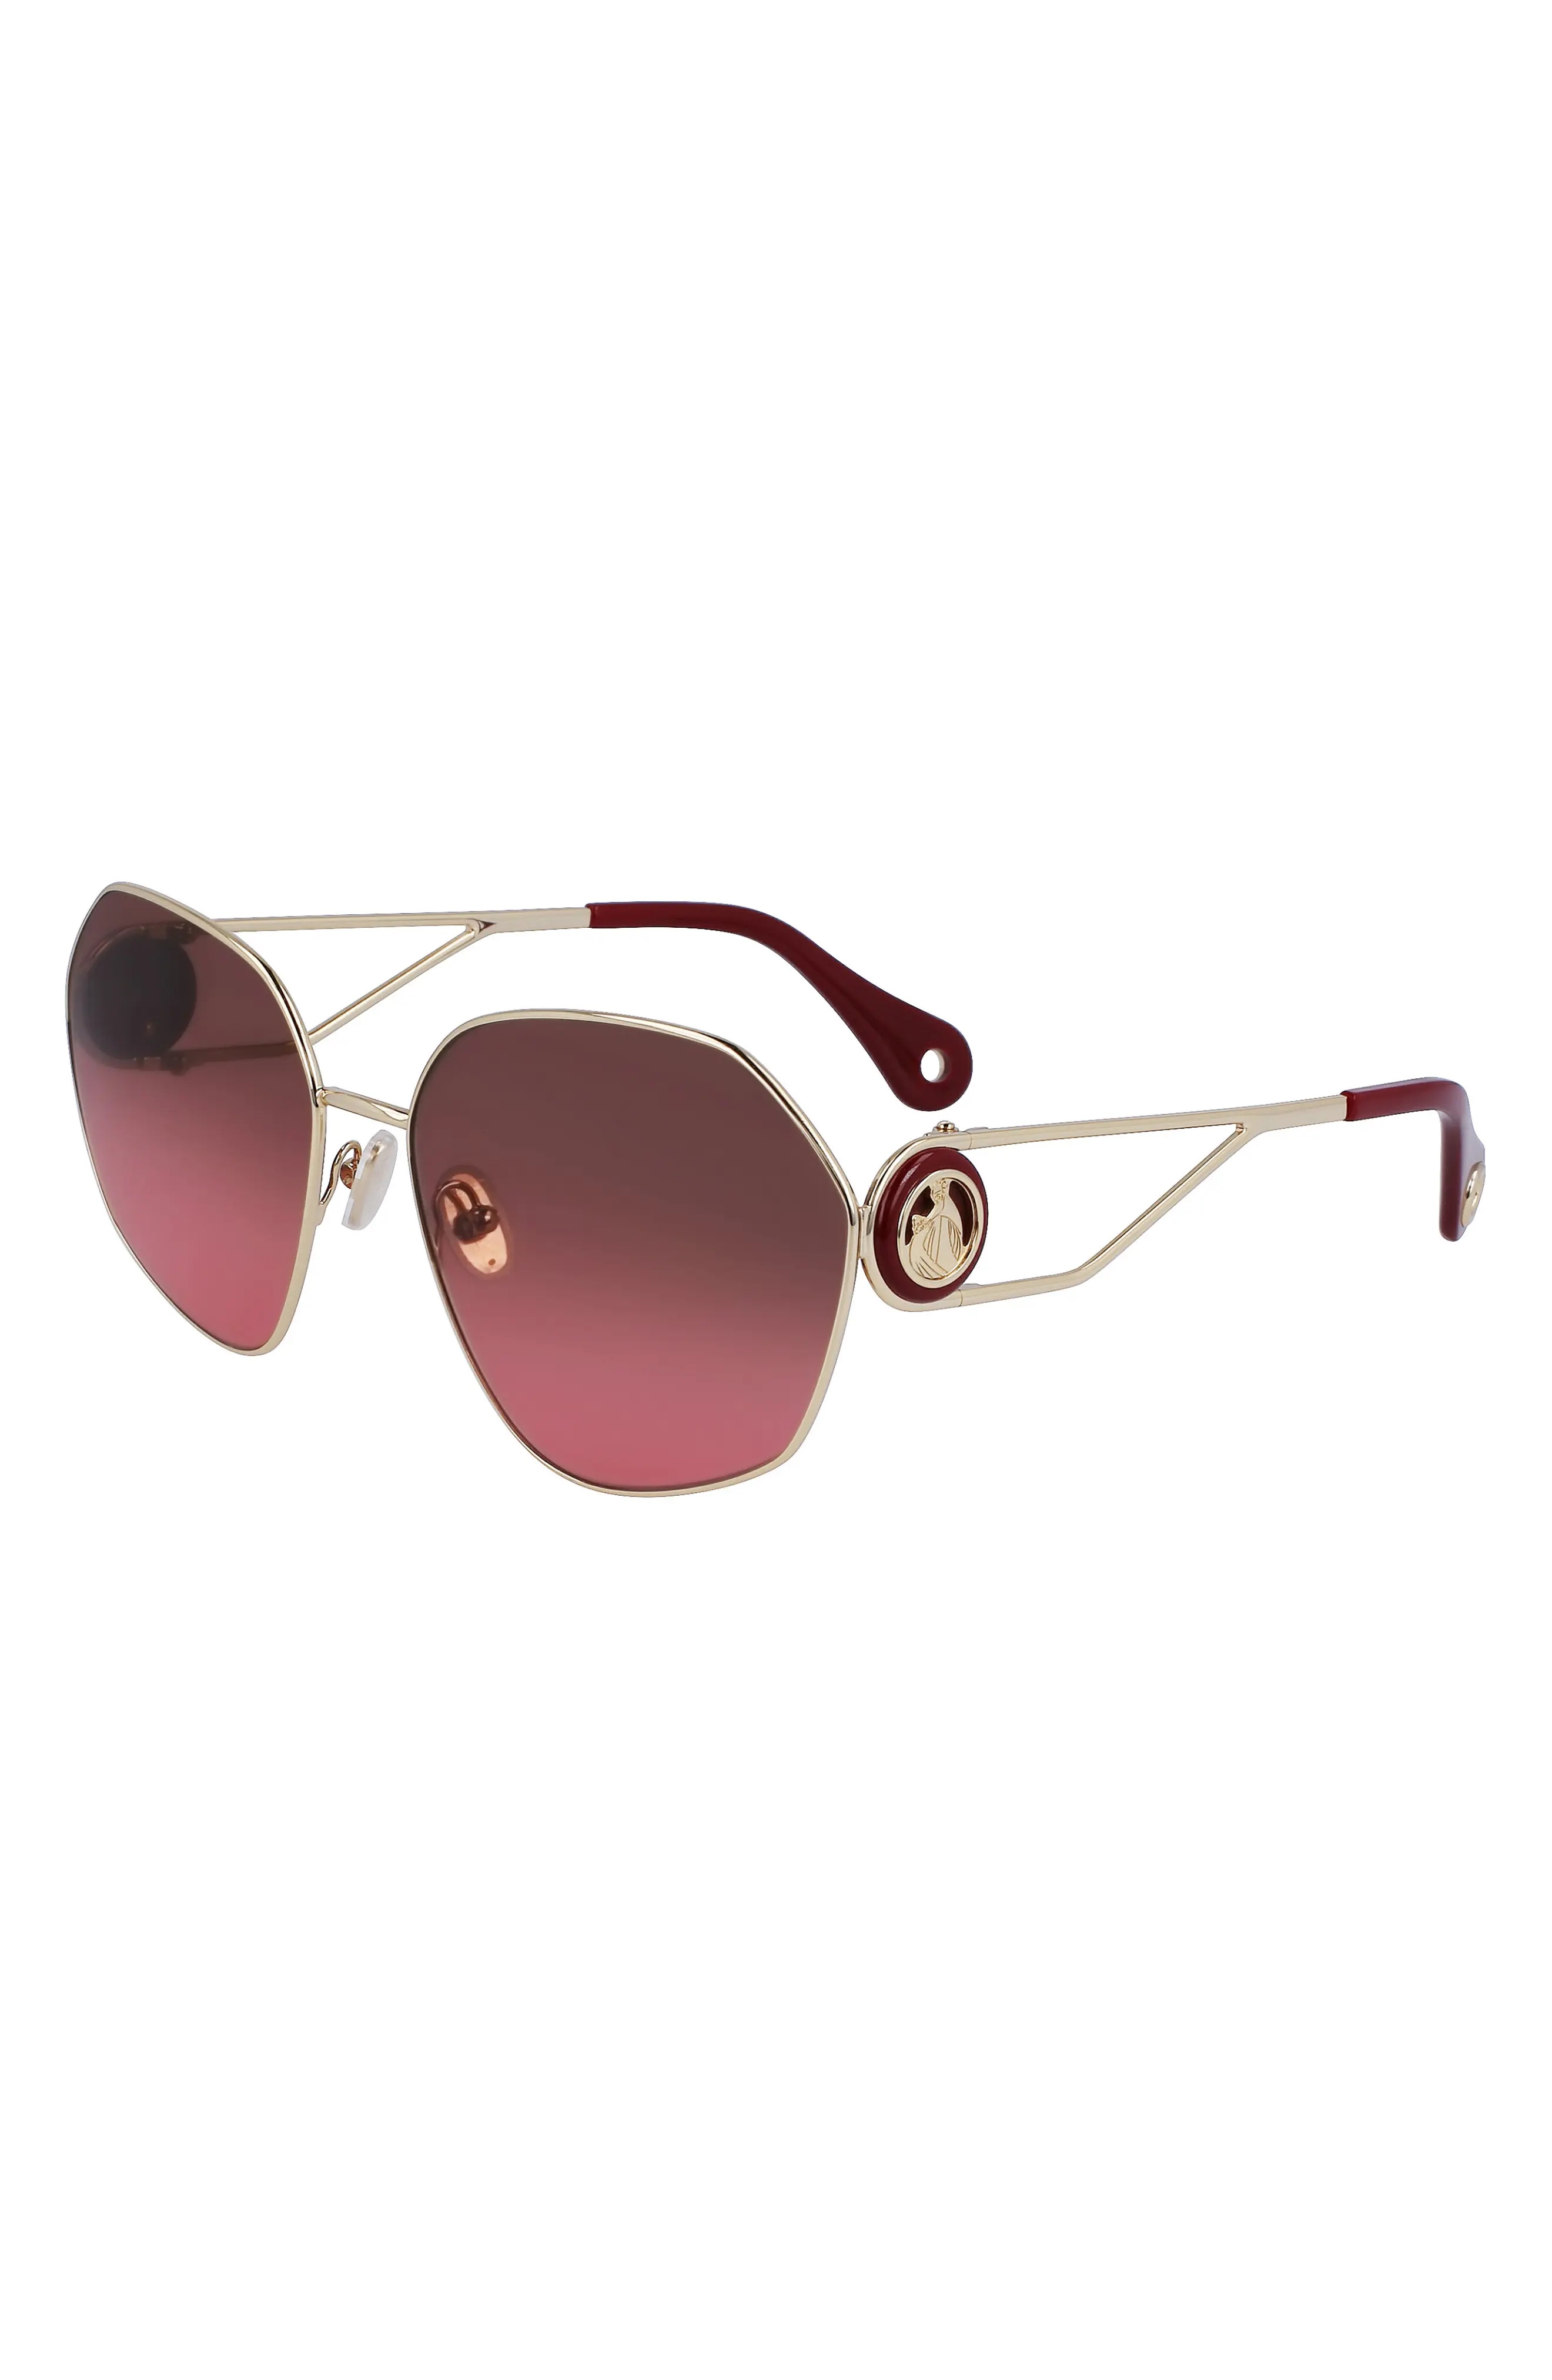 Mother & Child 62mm Oversize Rectangular Sunglasses in Gold/Gradient Cherry - 2